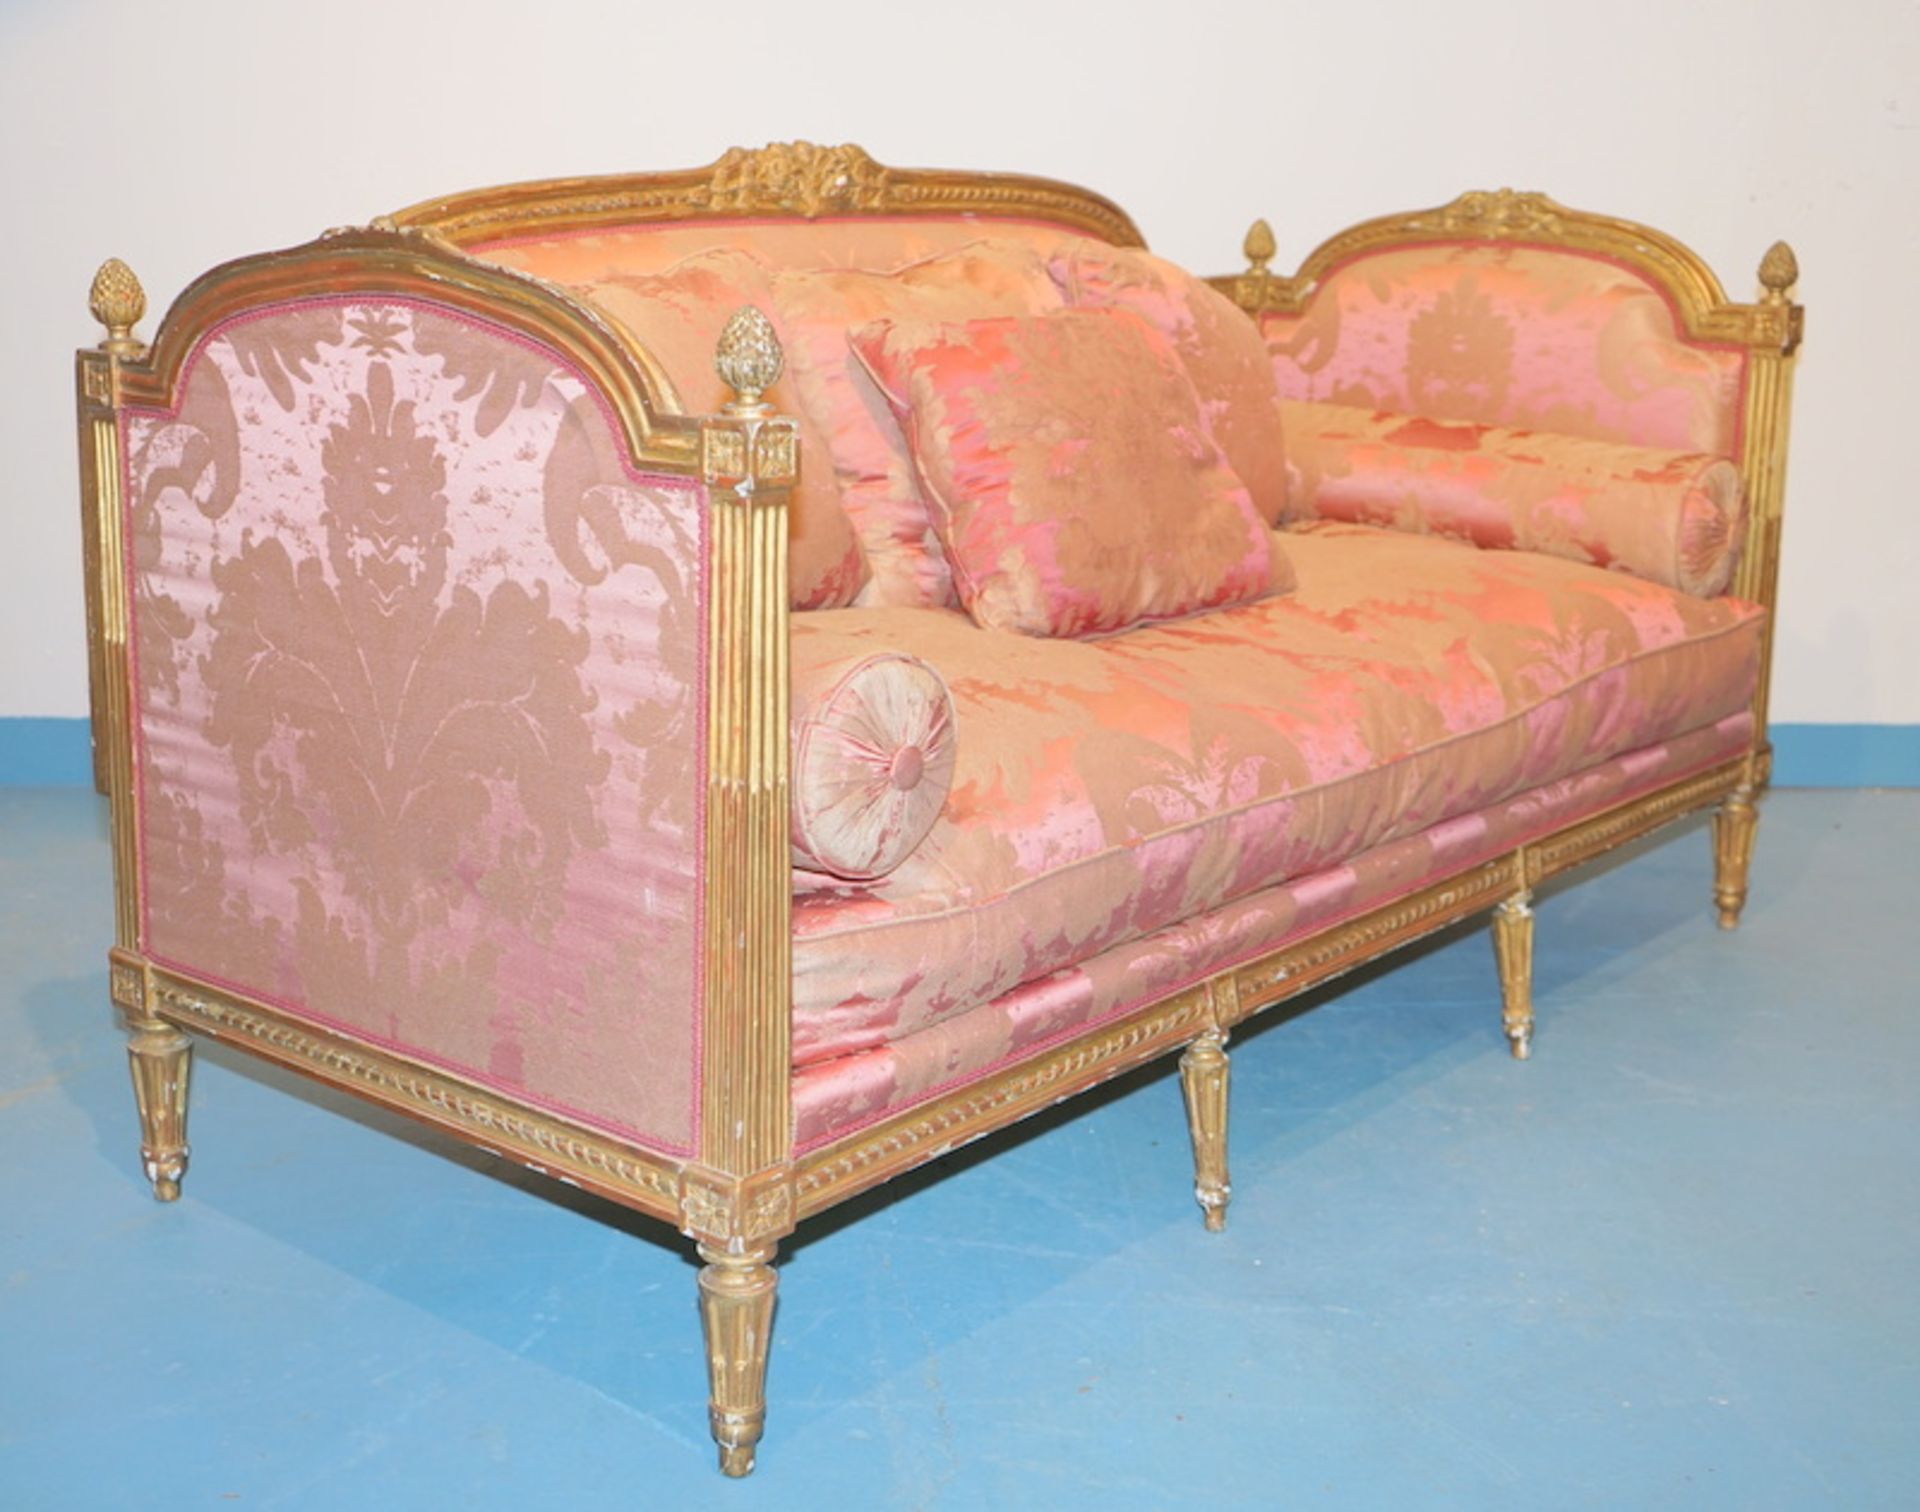 Großes Sofa, Lit du Jour, Louis Seize Stil, 19.Jhd. - Image 5 of 7